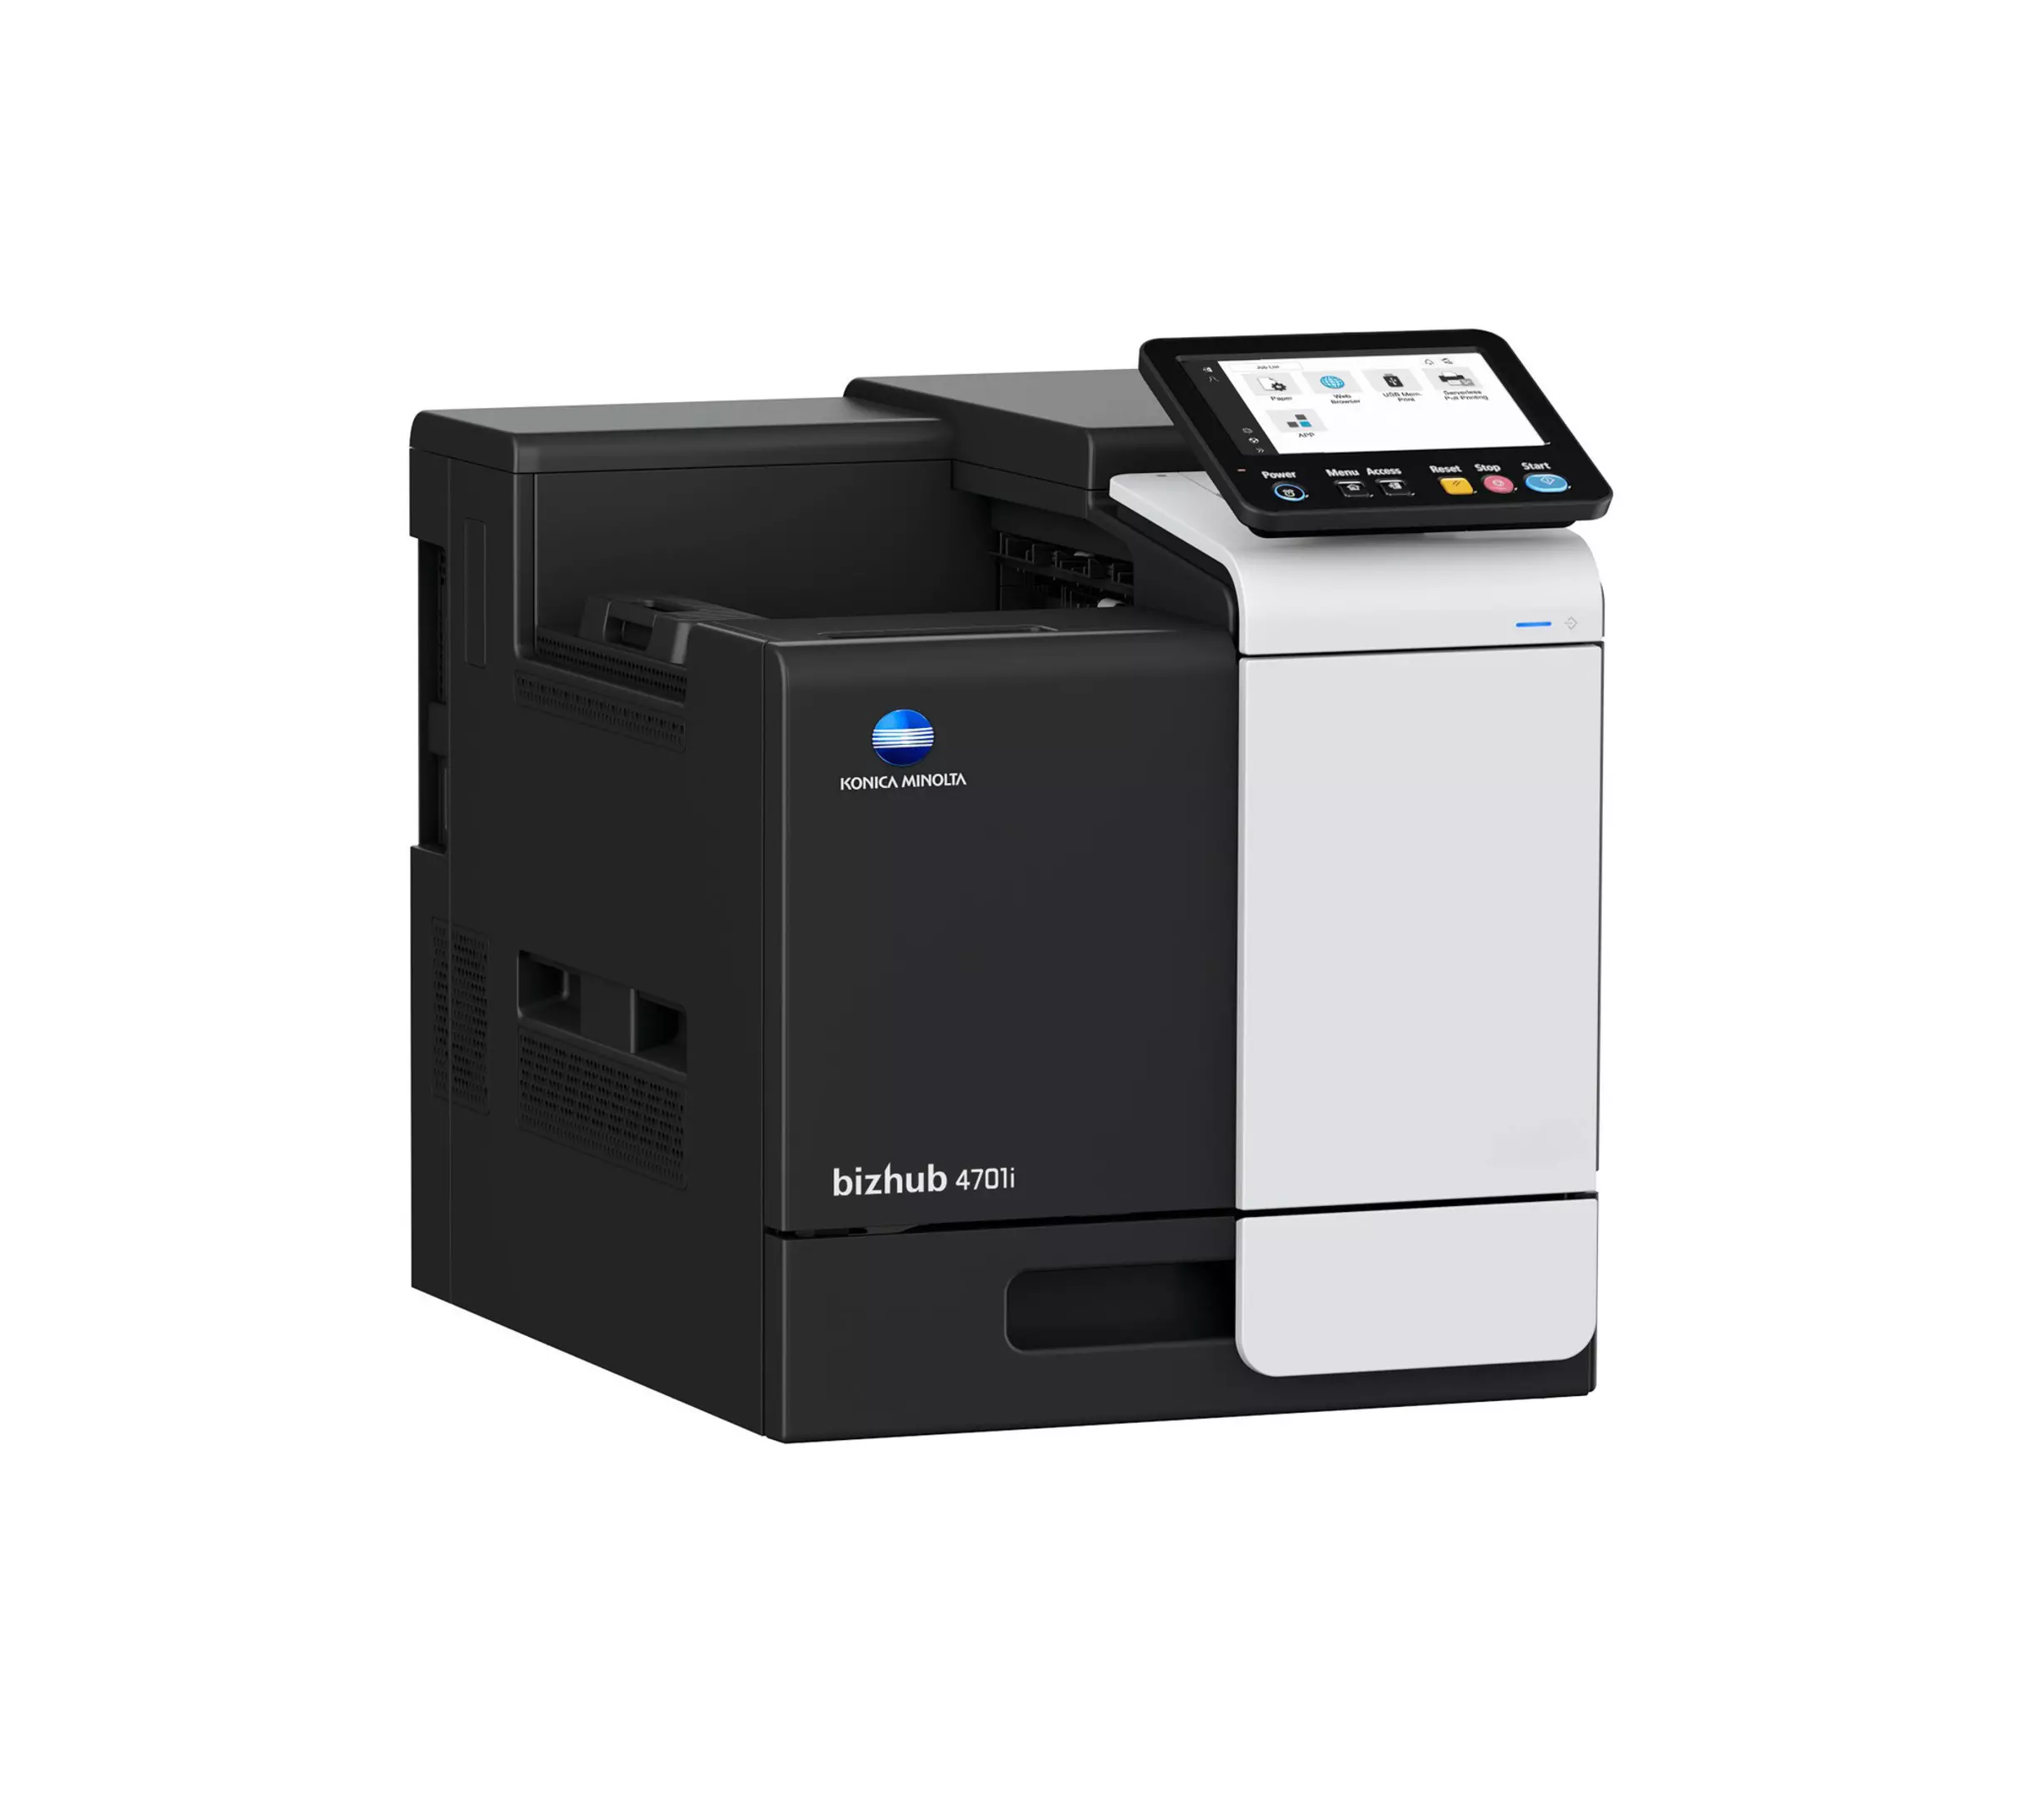 Konica Minolta i-series bizhub 4701i multifunctional printer